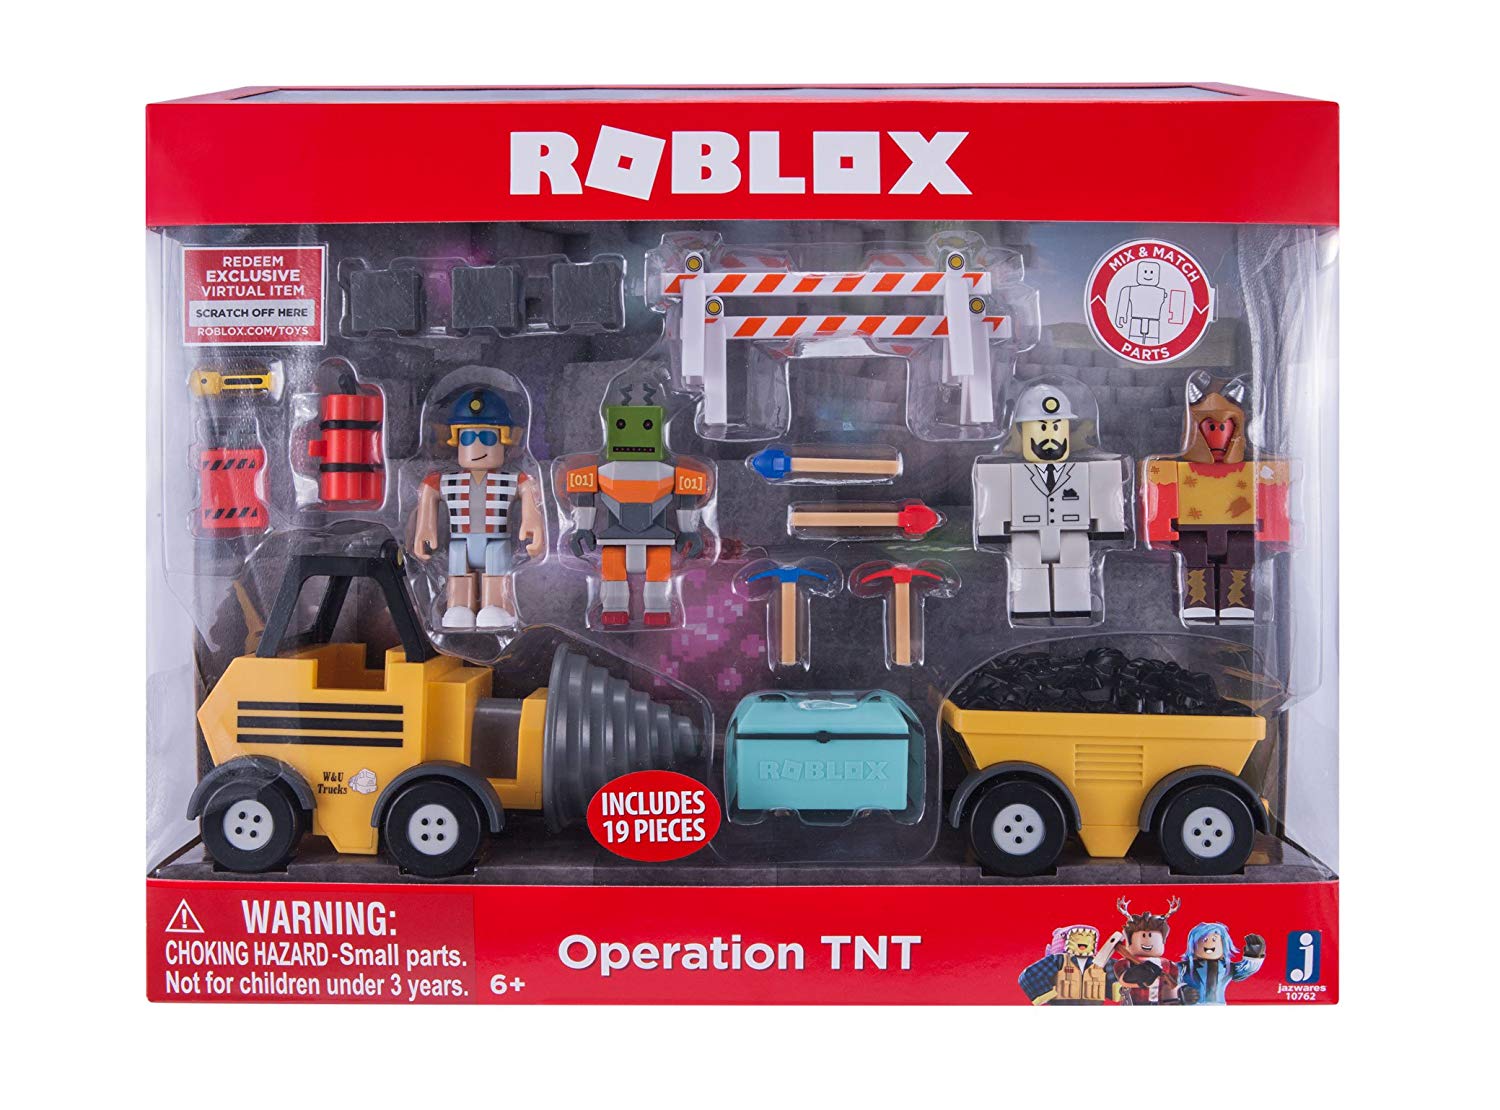 roblox toys jailbreak